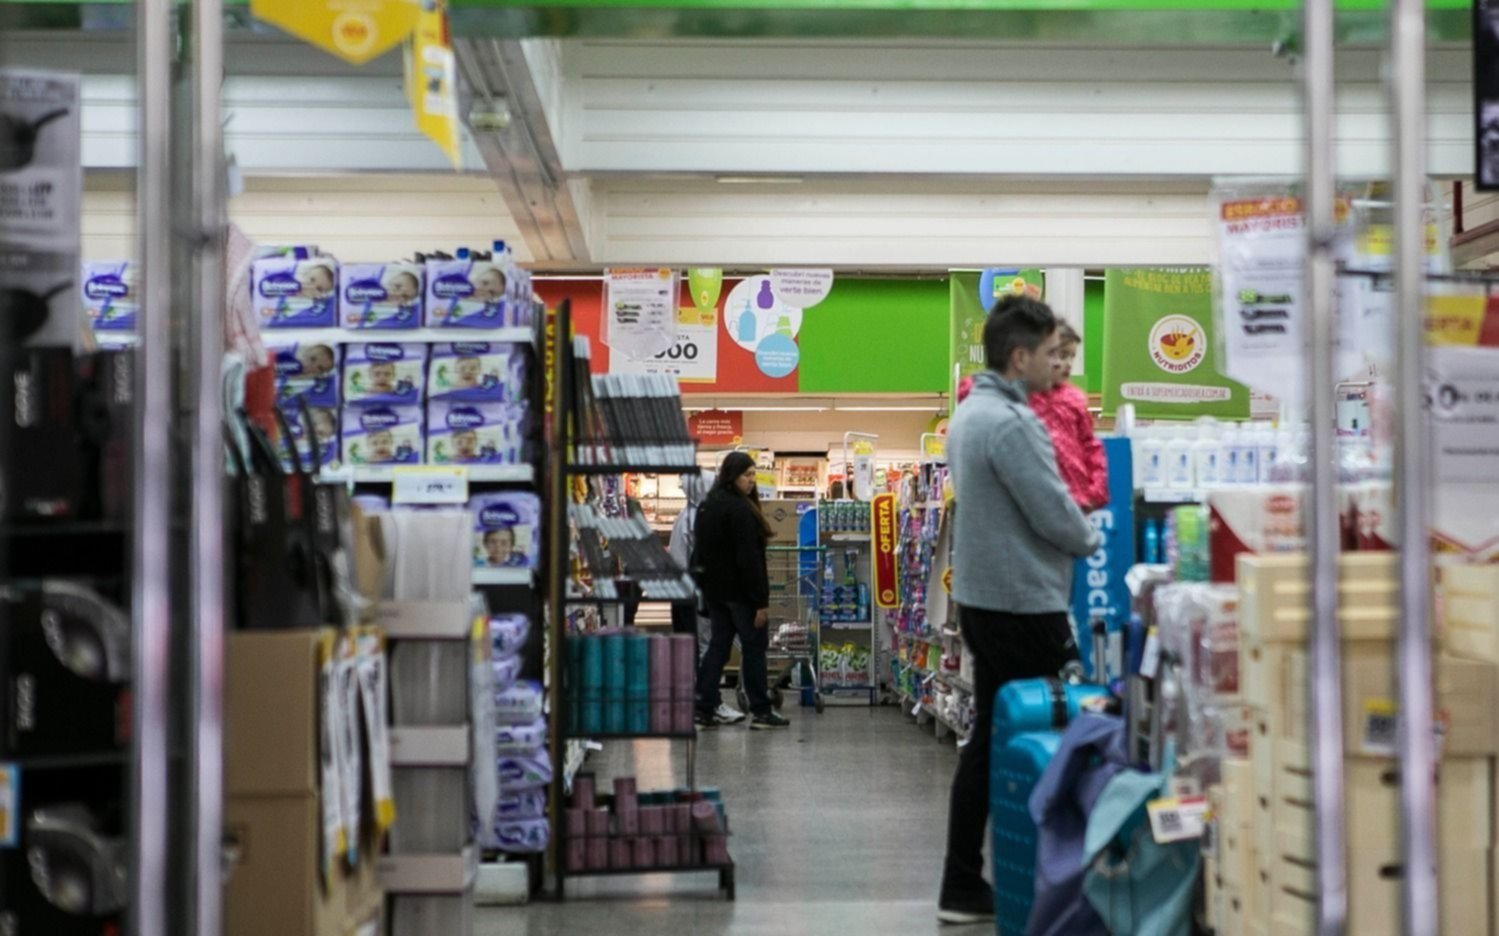 Bapro: mañana llega el primer miércoles de descuentos del mes en supermercados